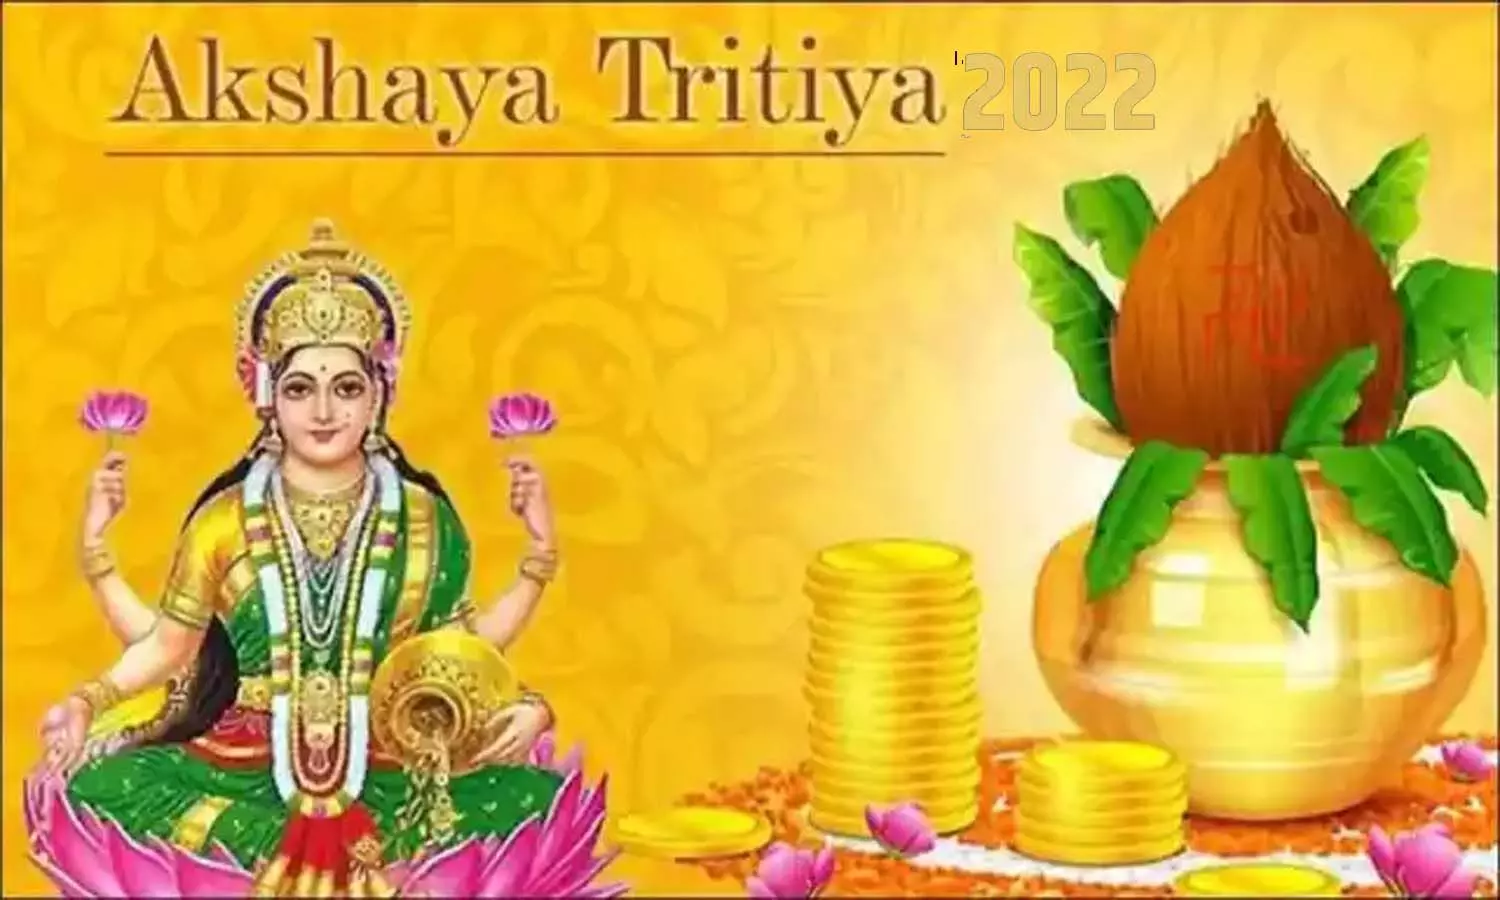 Akshaya Tritiya 2022: Akshaya Tritiya is a very important festival, there is no date greater than this